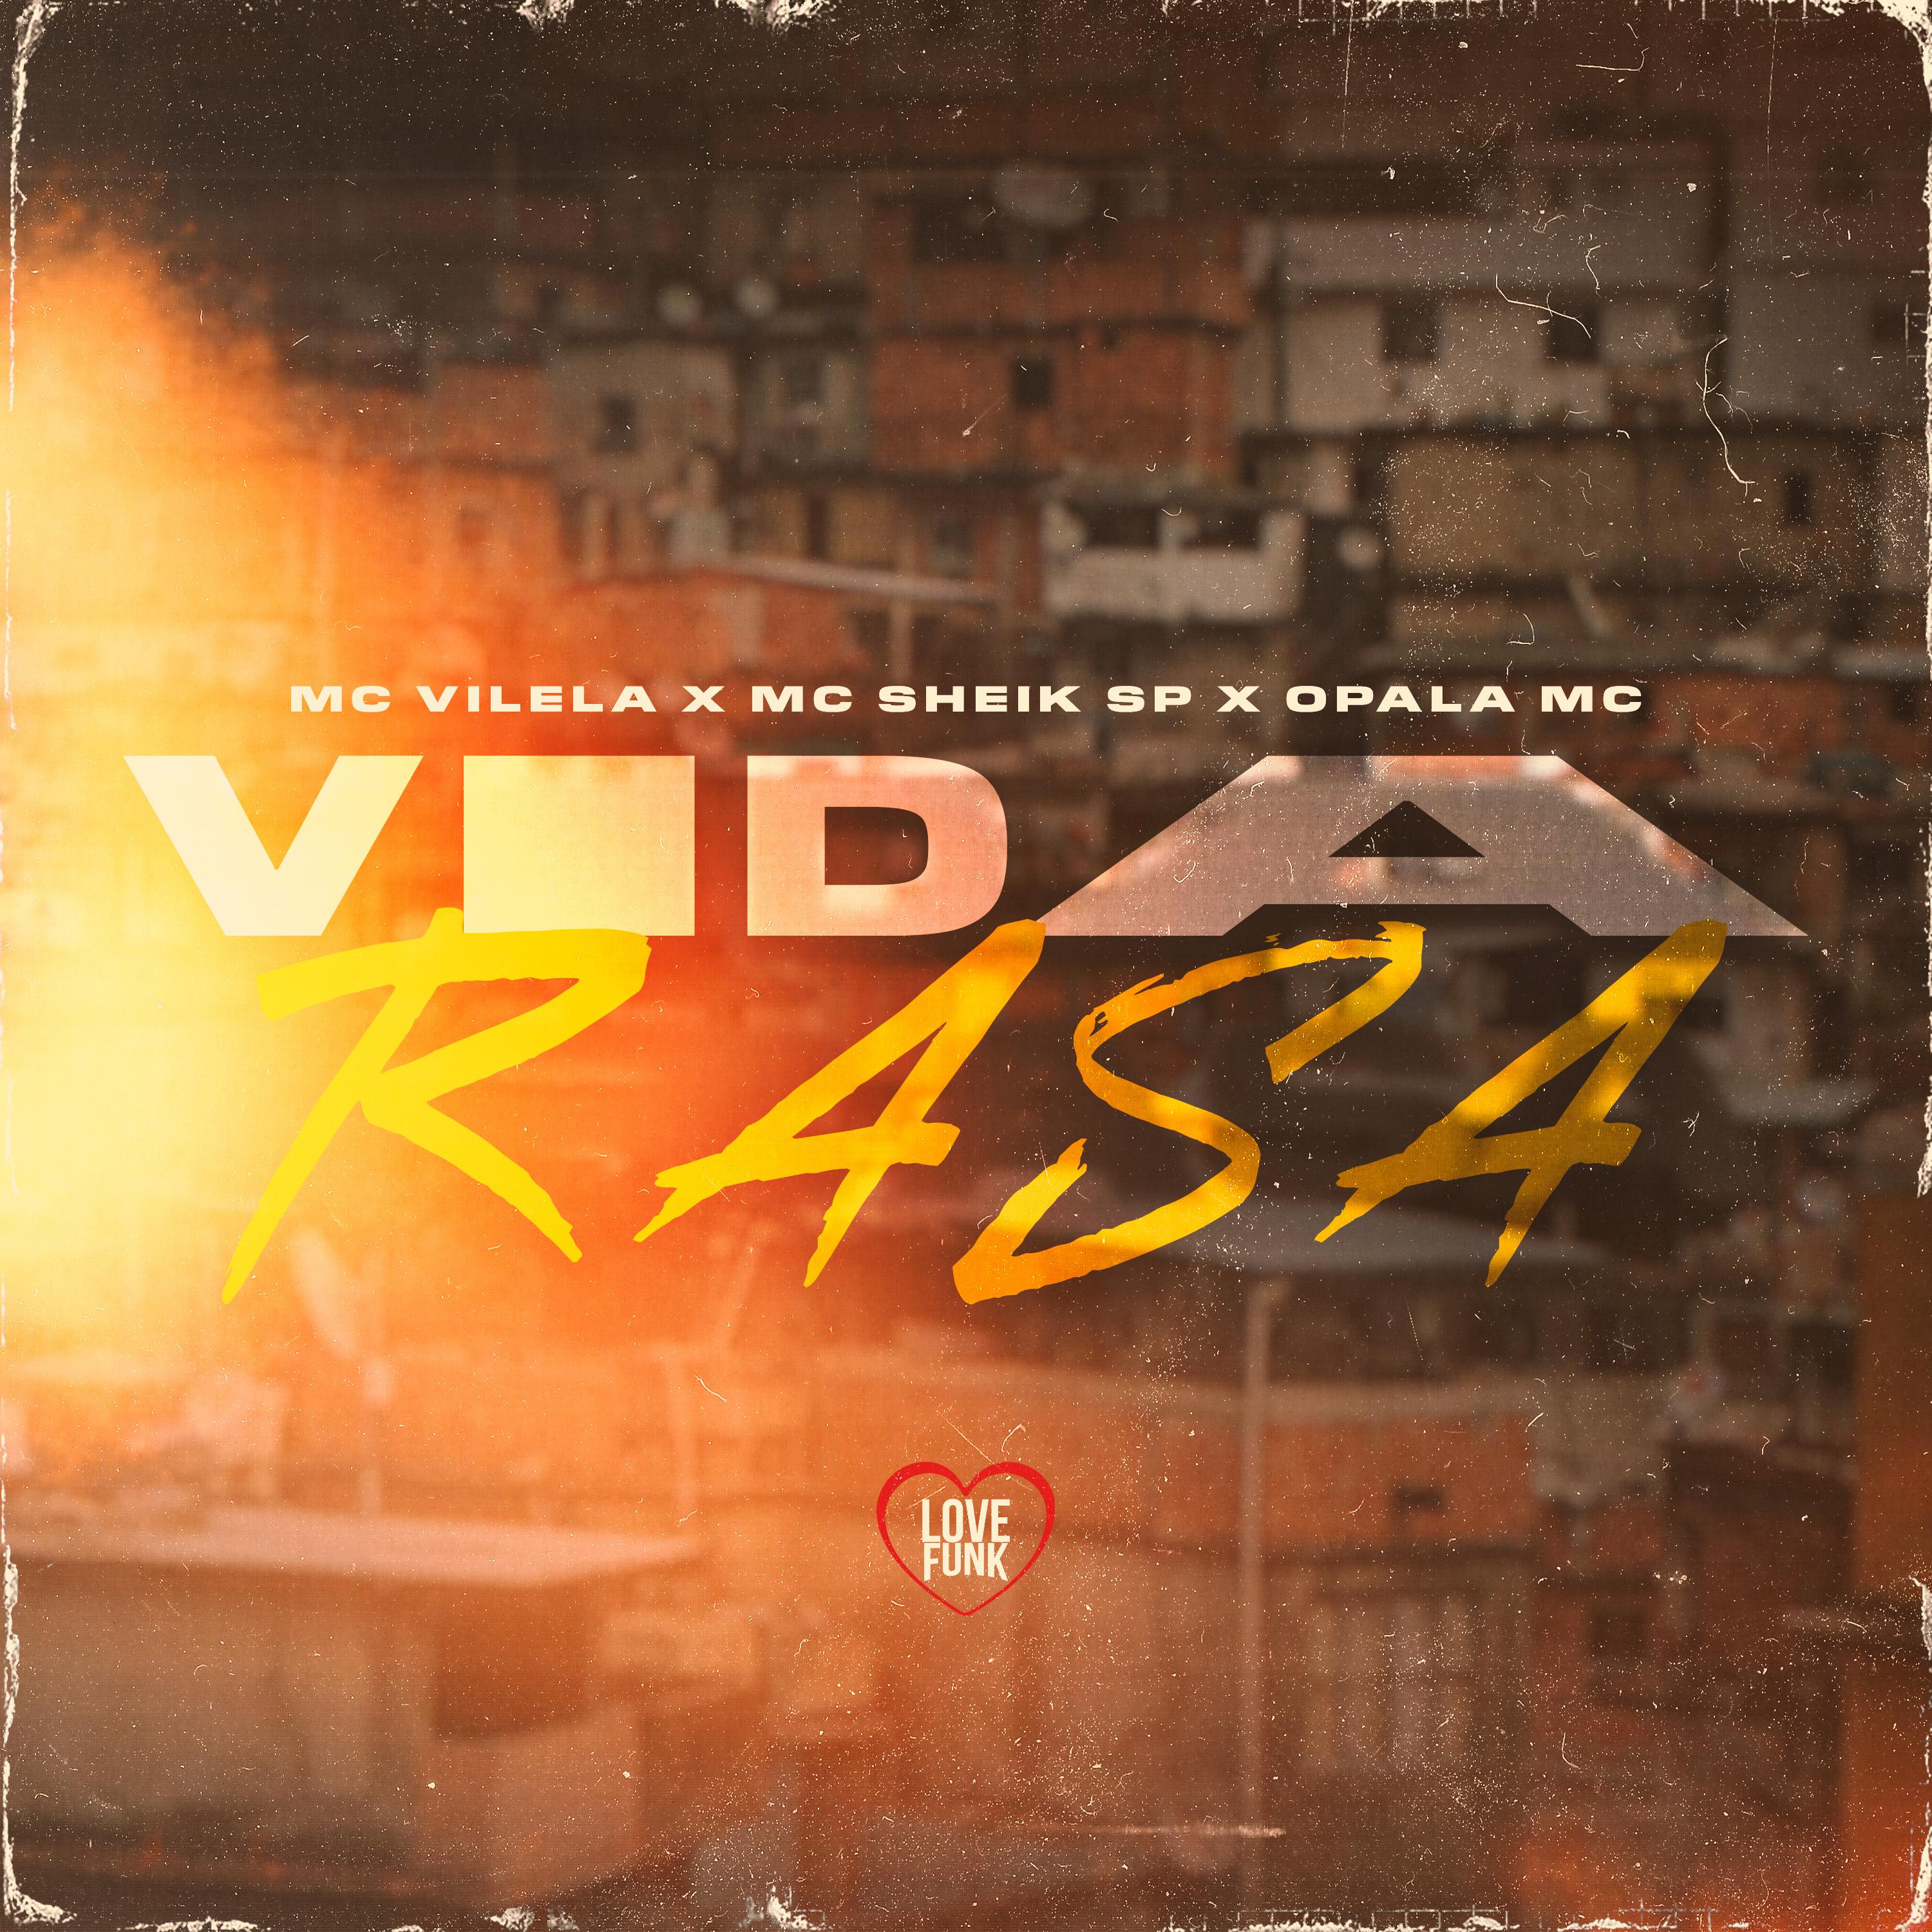 Постер альбома Vida Rasa